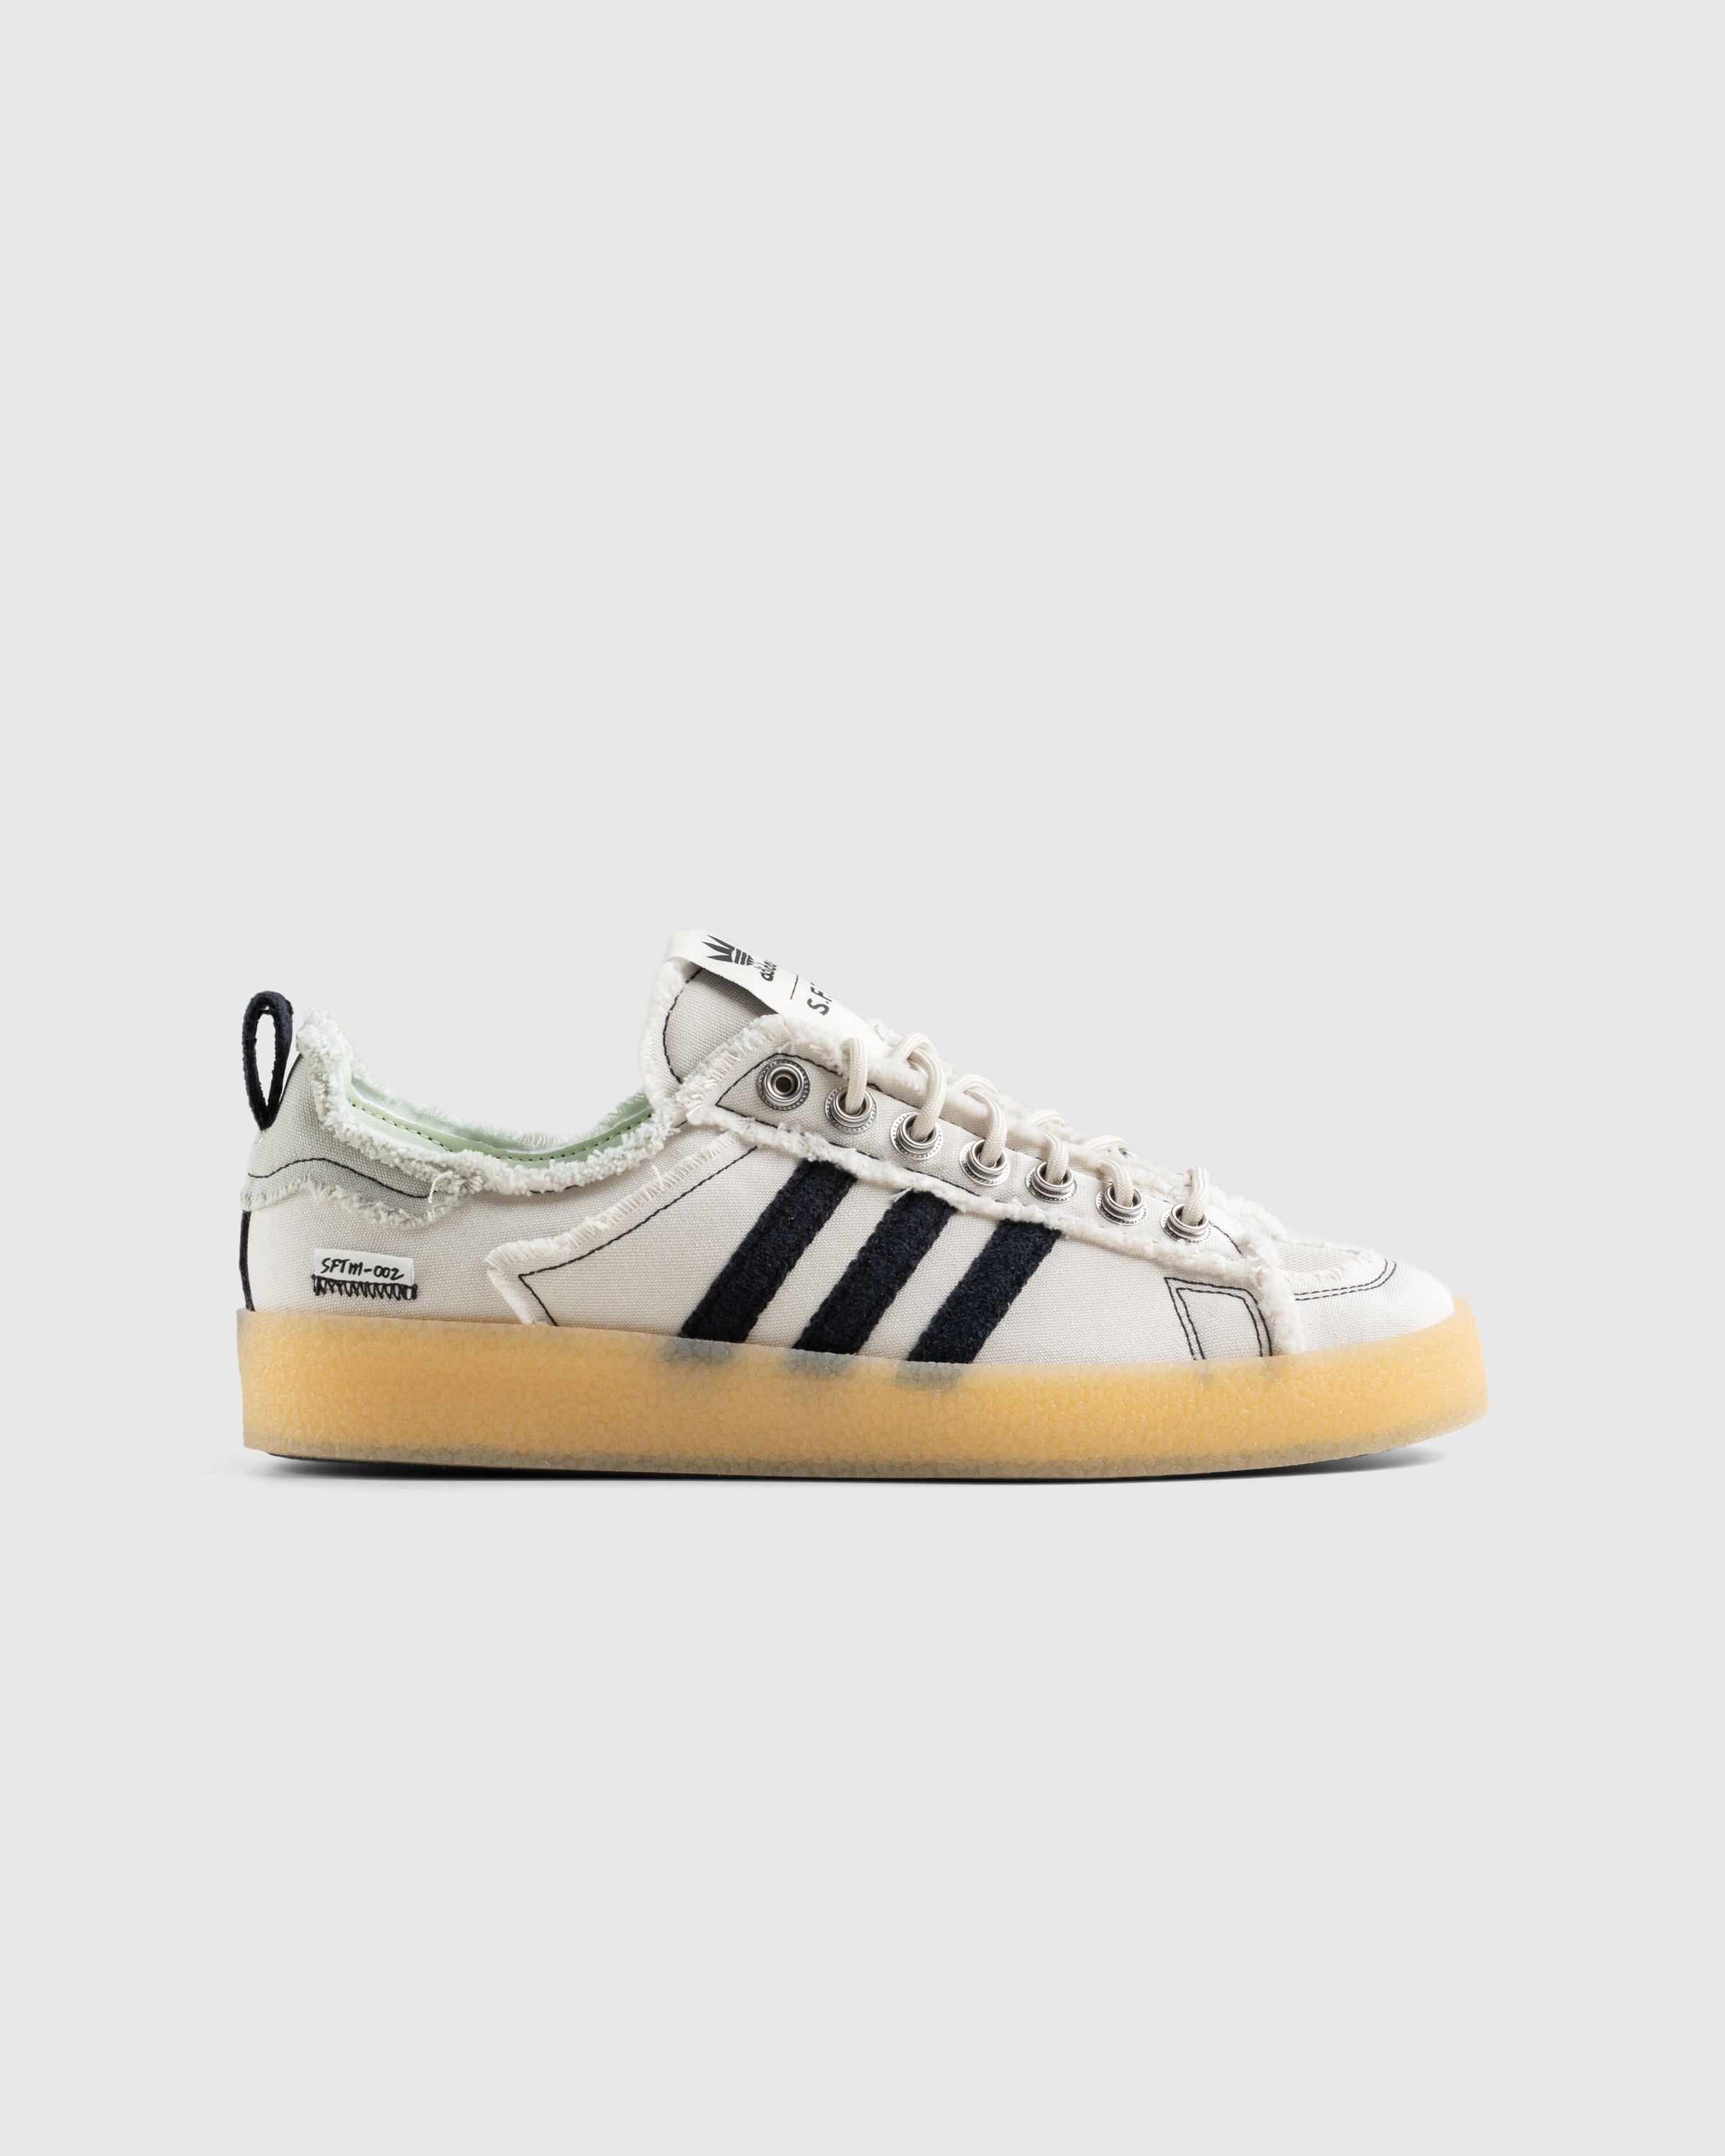 Adidas - CAMPUS 80s CBROWN/CBLACK/SESAME - Footwear - Brown - Image 1